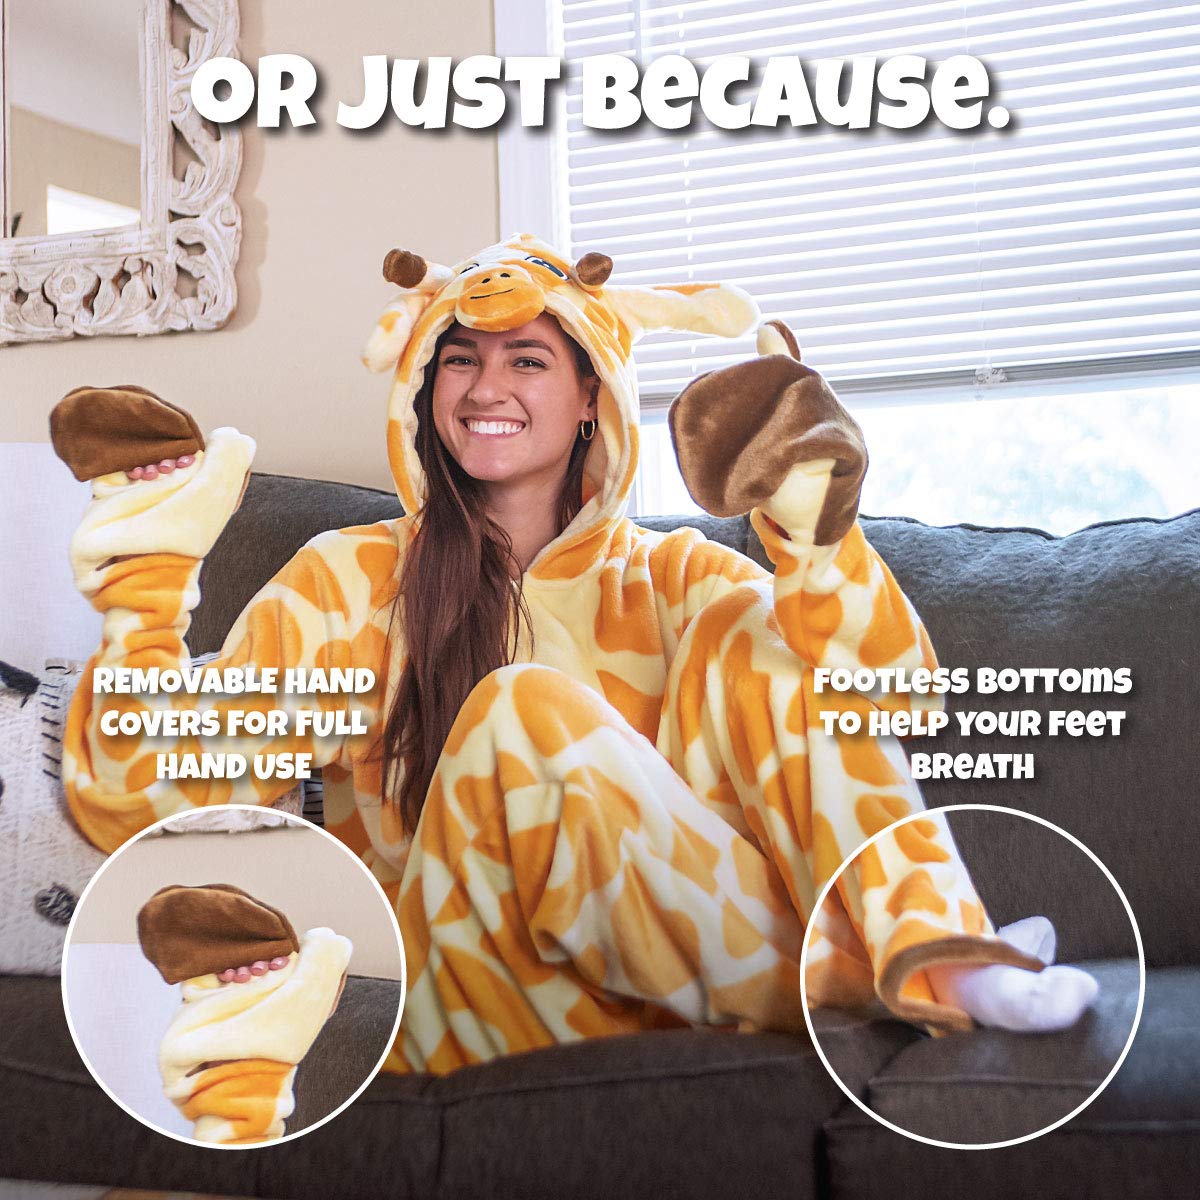 Adult Unisex Flappy Suit Onesie Pajama Halloween Cosplay Costume Jumpsuit